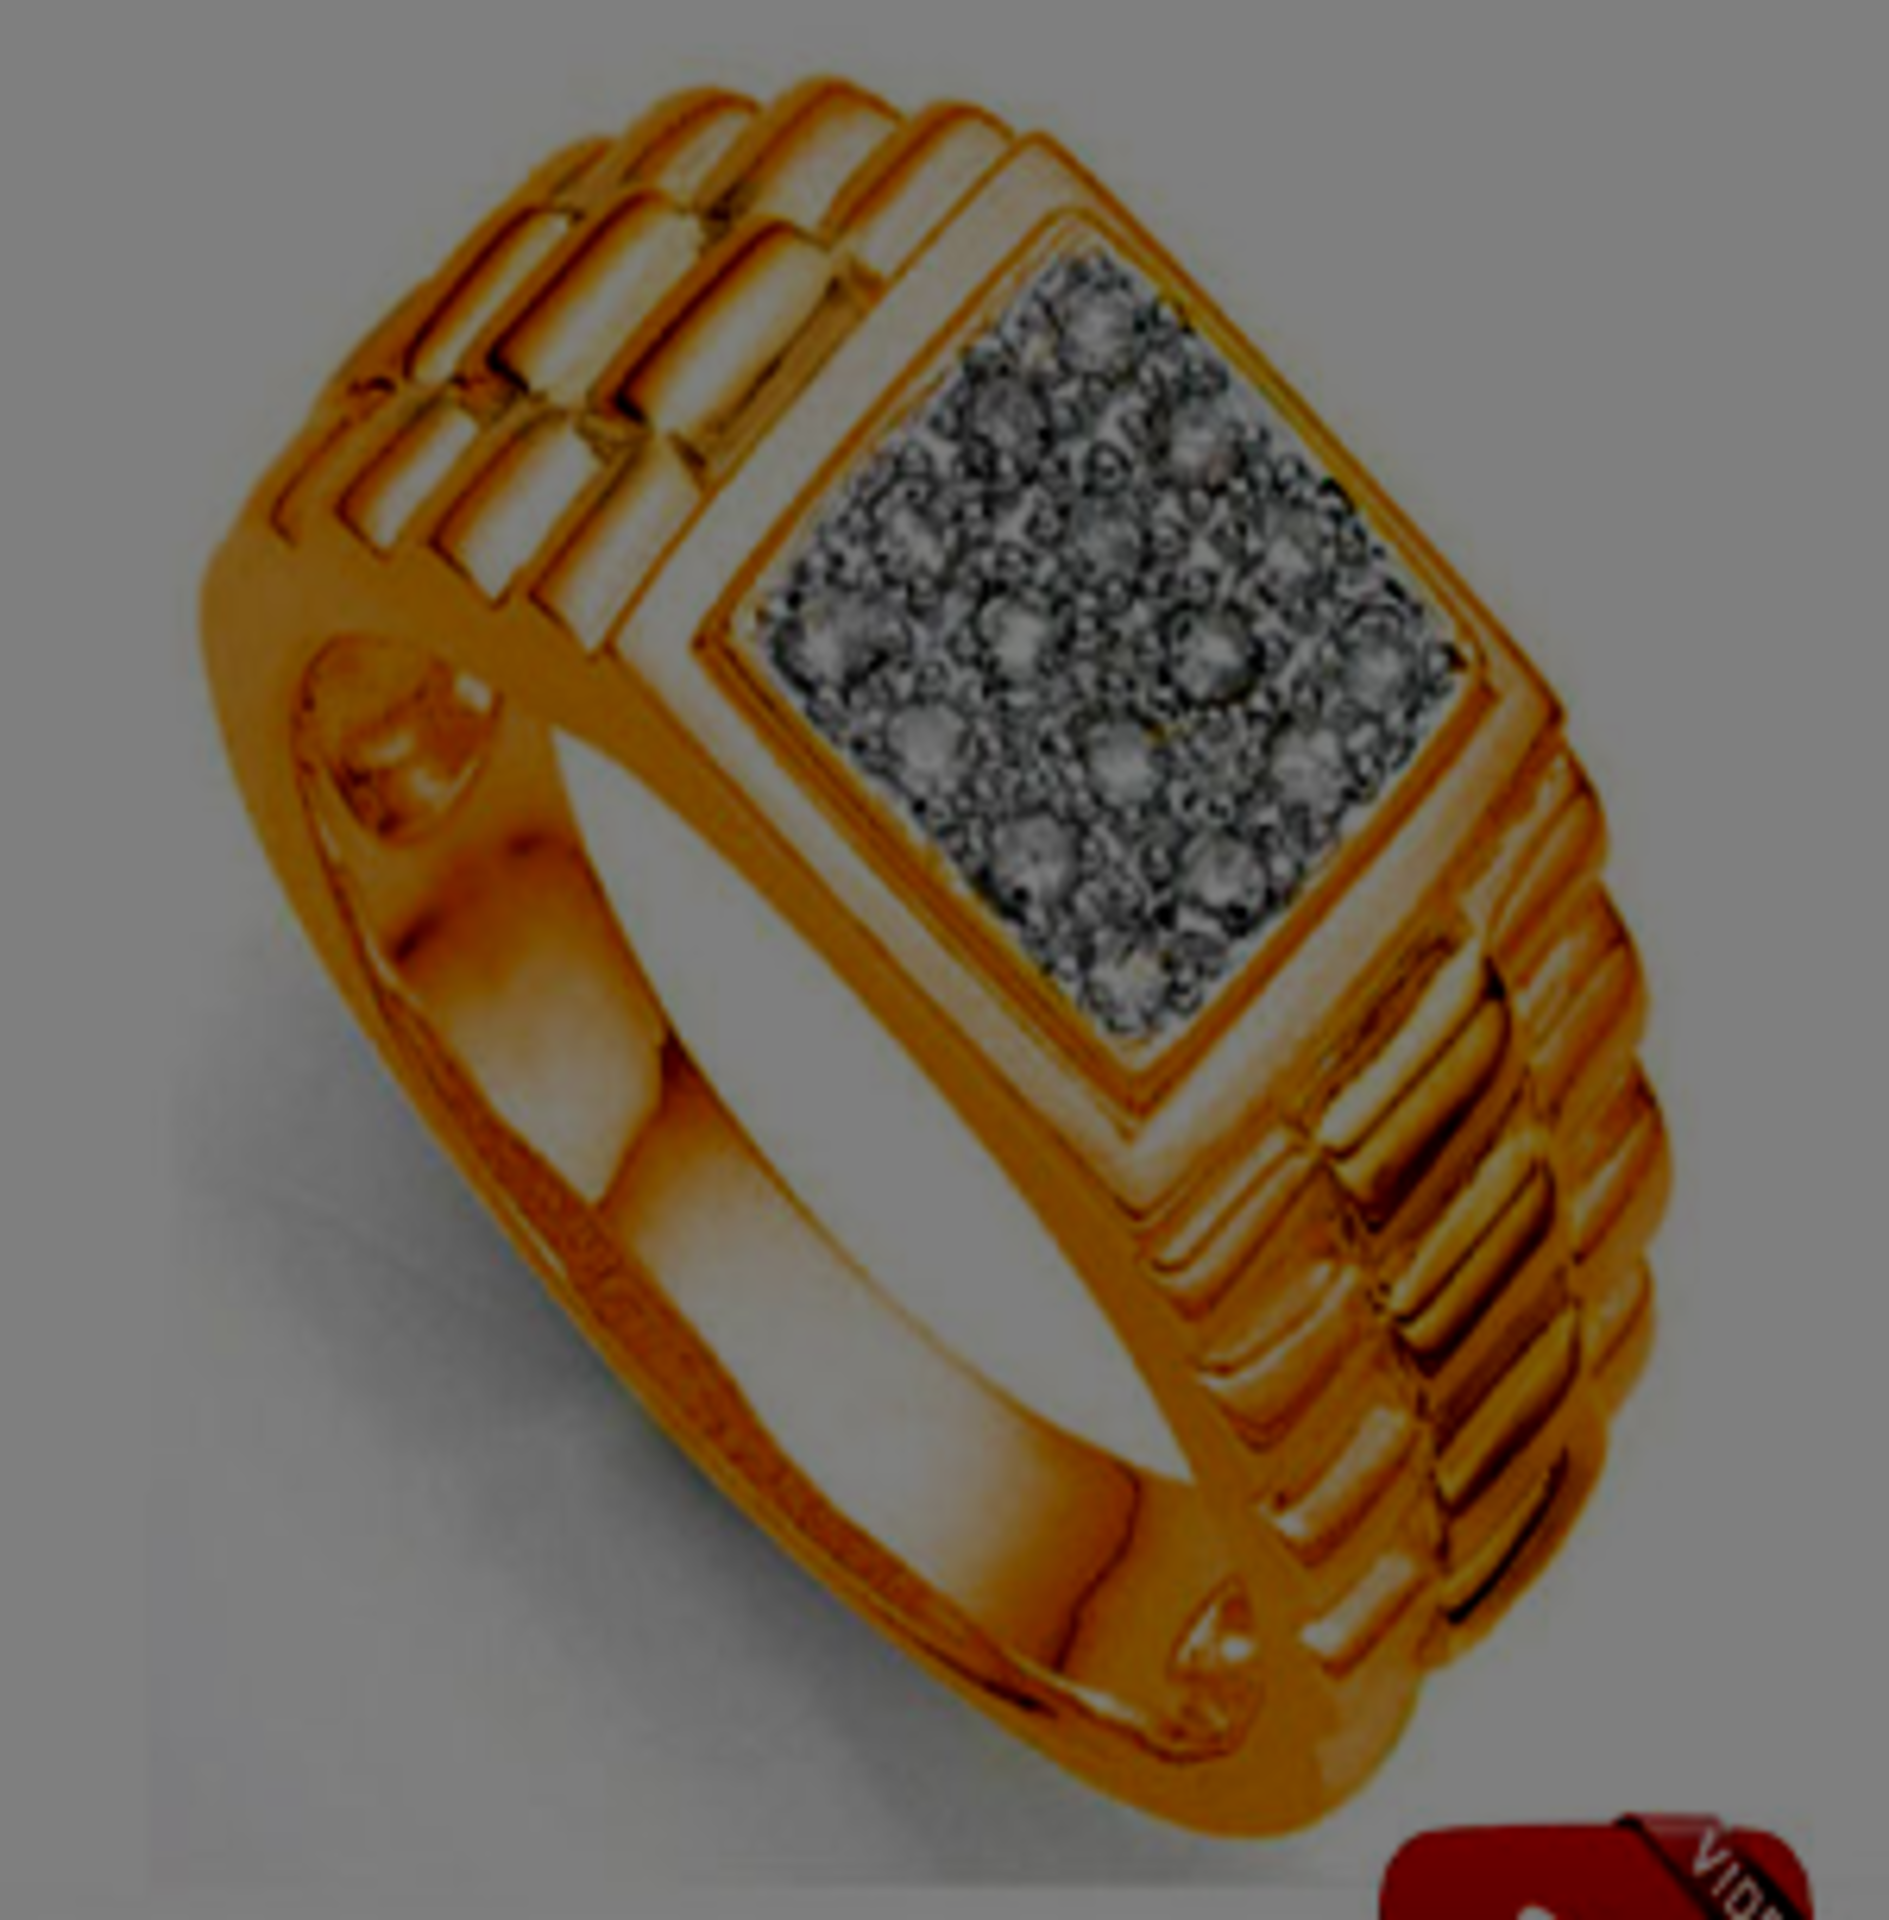 ELEGANT 0.093 CARAT TW (16 PCS) GENUINE DIAMOND 18K YELLOW GOLD OVER STERLING SILVER RING - Image 2 of 2